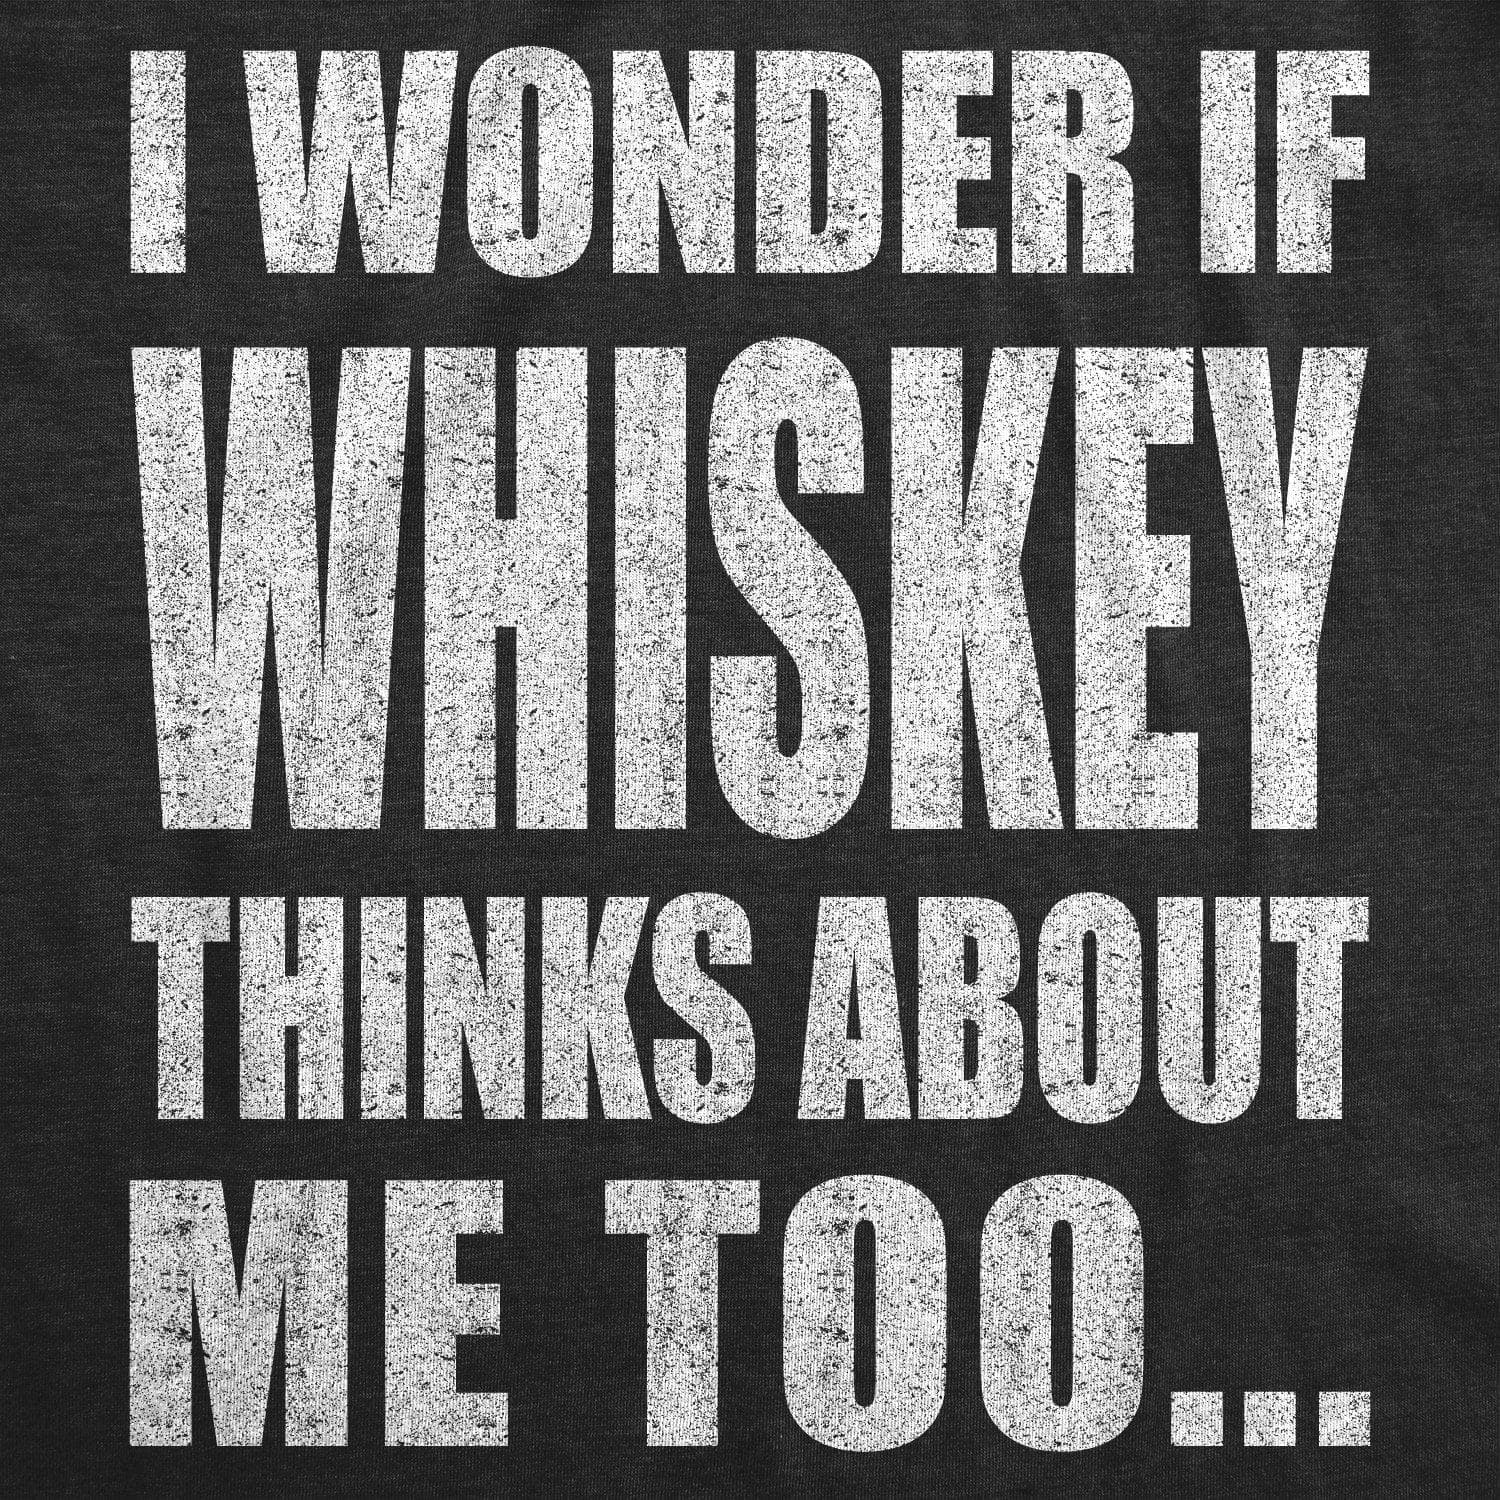 I Wonder If Whiskey Thinks About Me Too Men's Tshirt - Crazy Dog T-Shirts